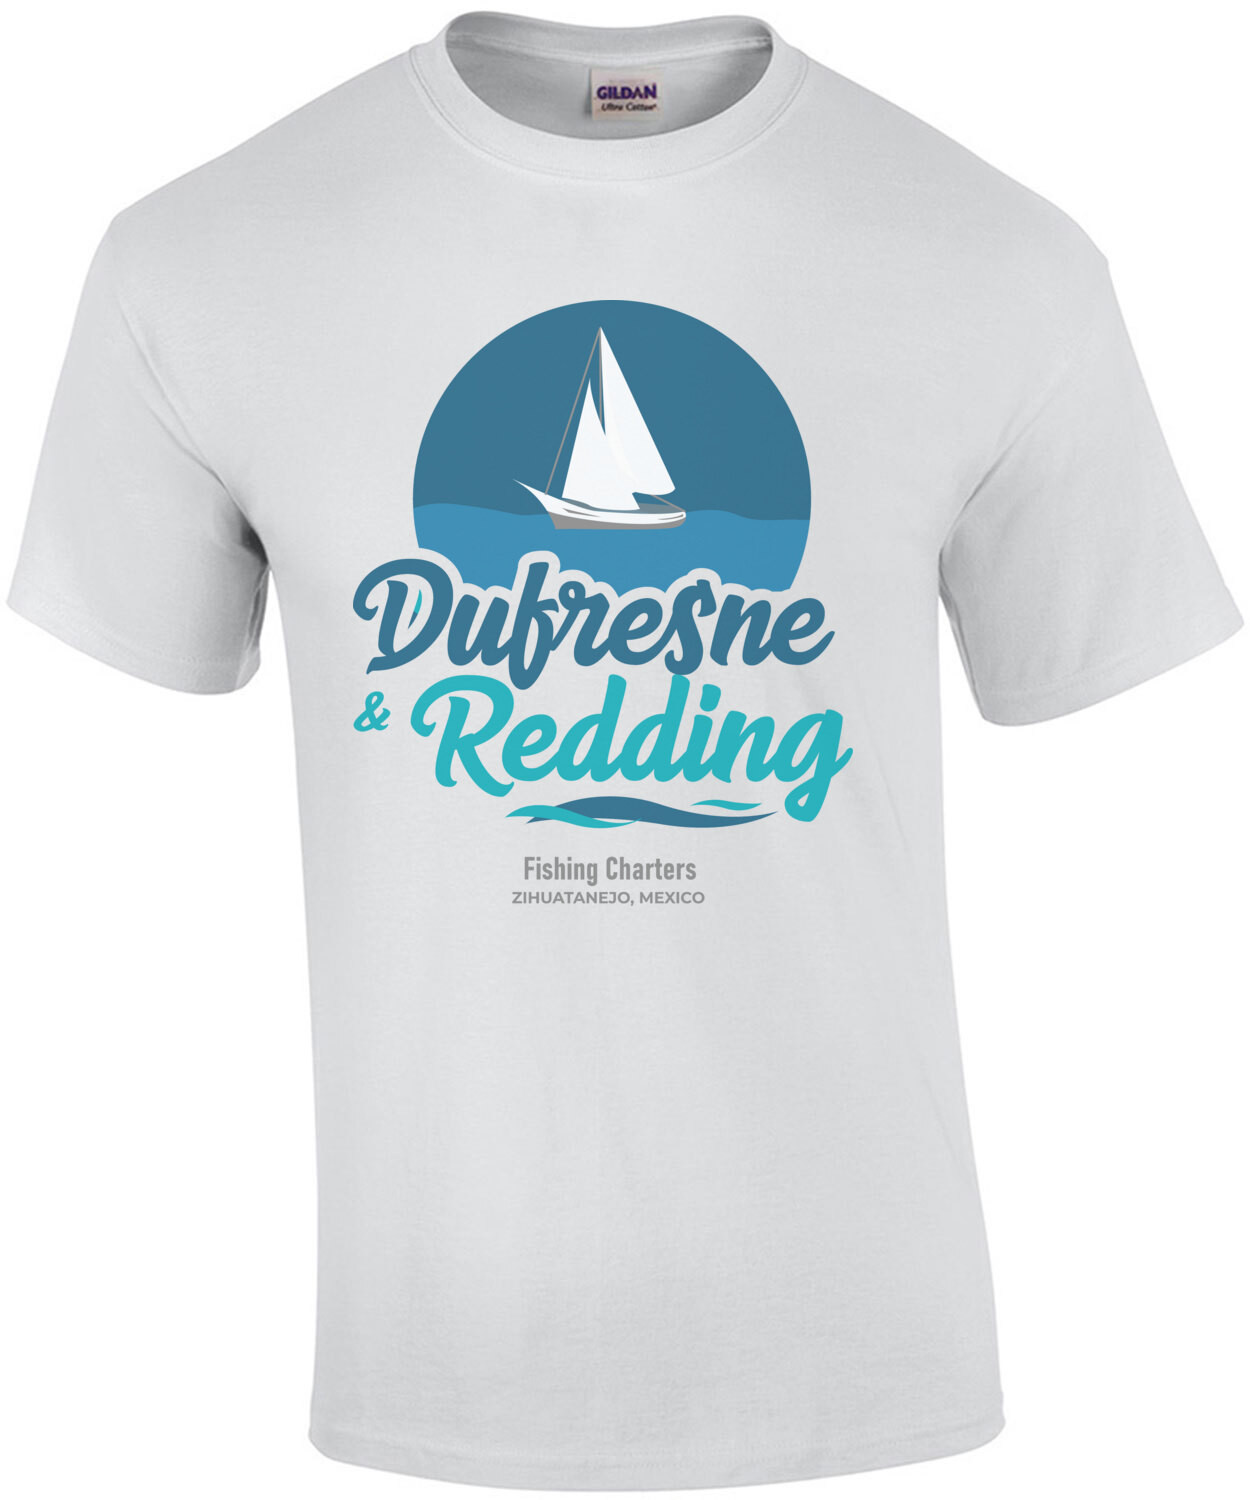 Dufresne & Redding - Fishing Charters - The Shawshank Redemption - 90's T-Shirt